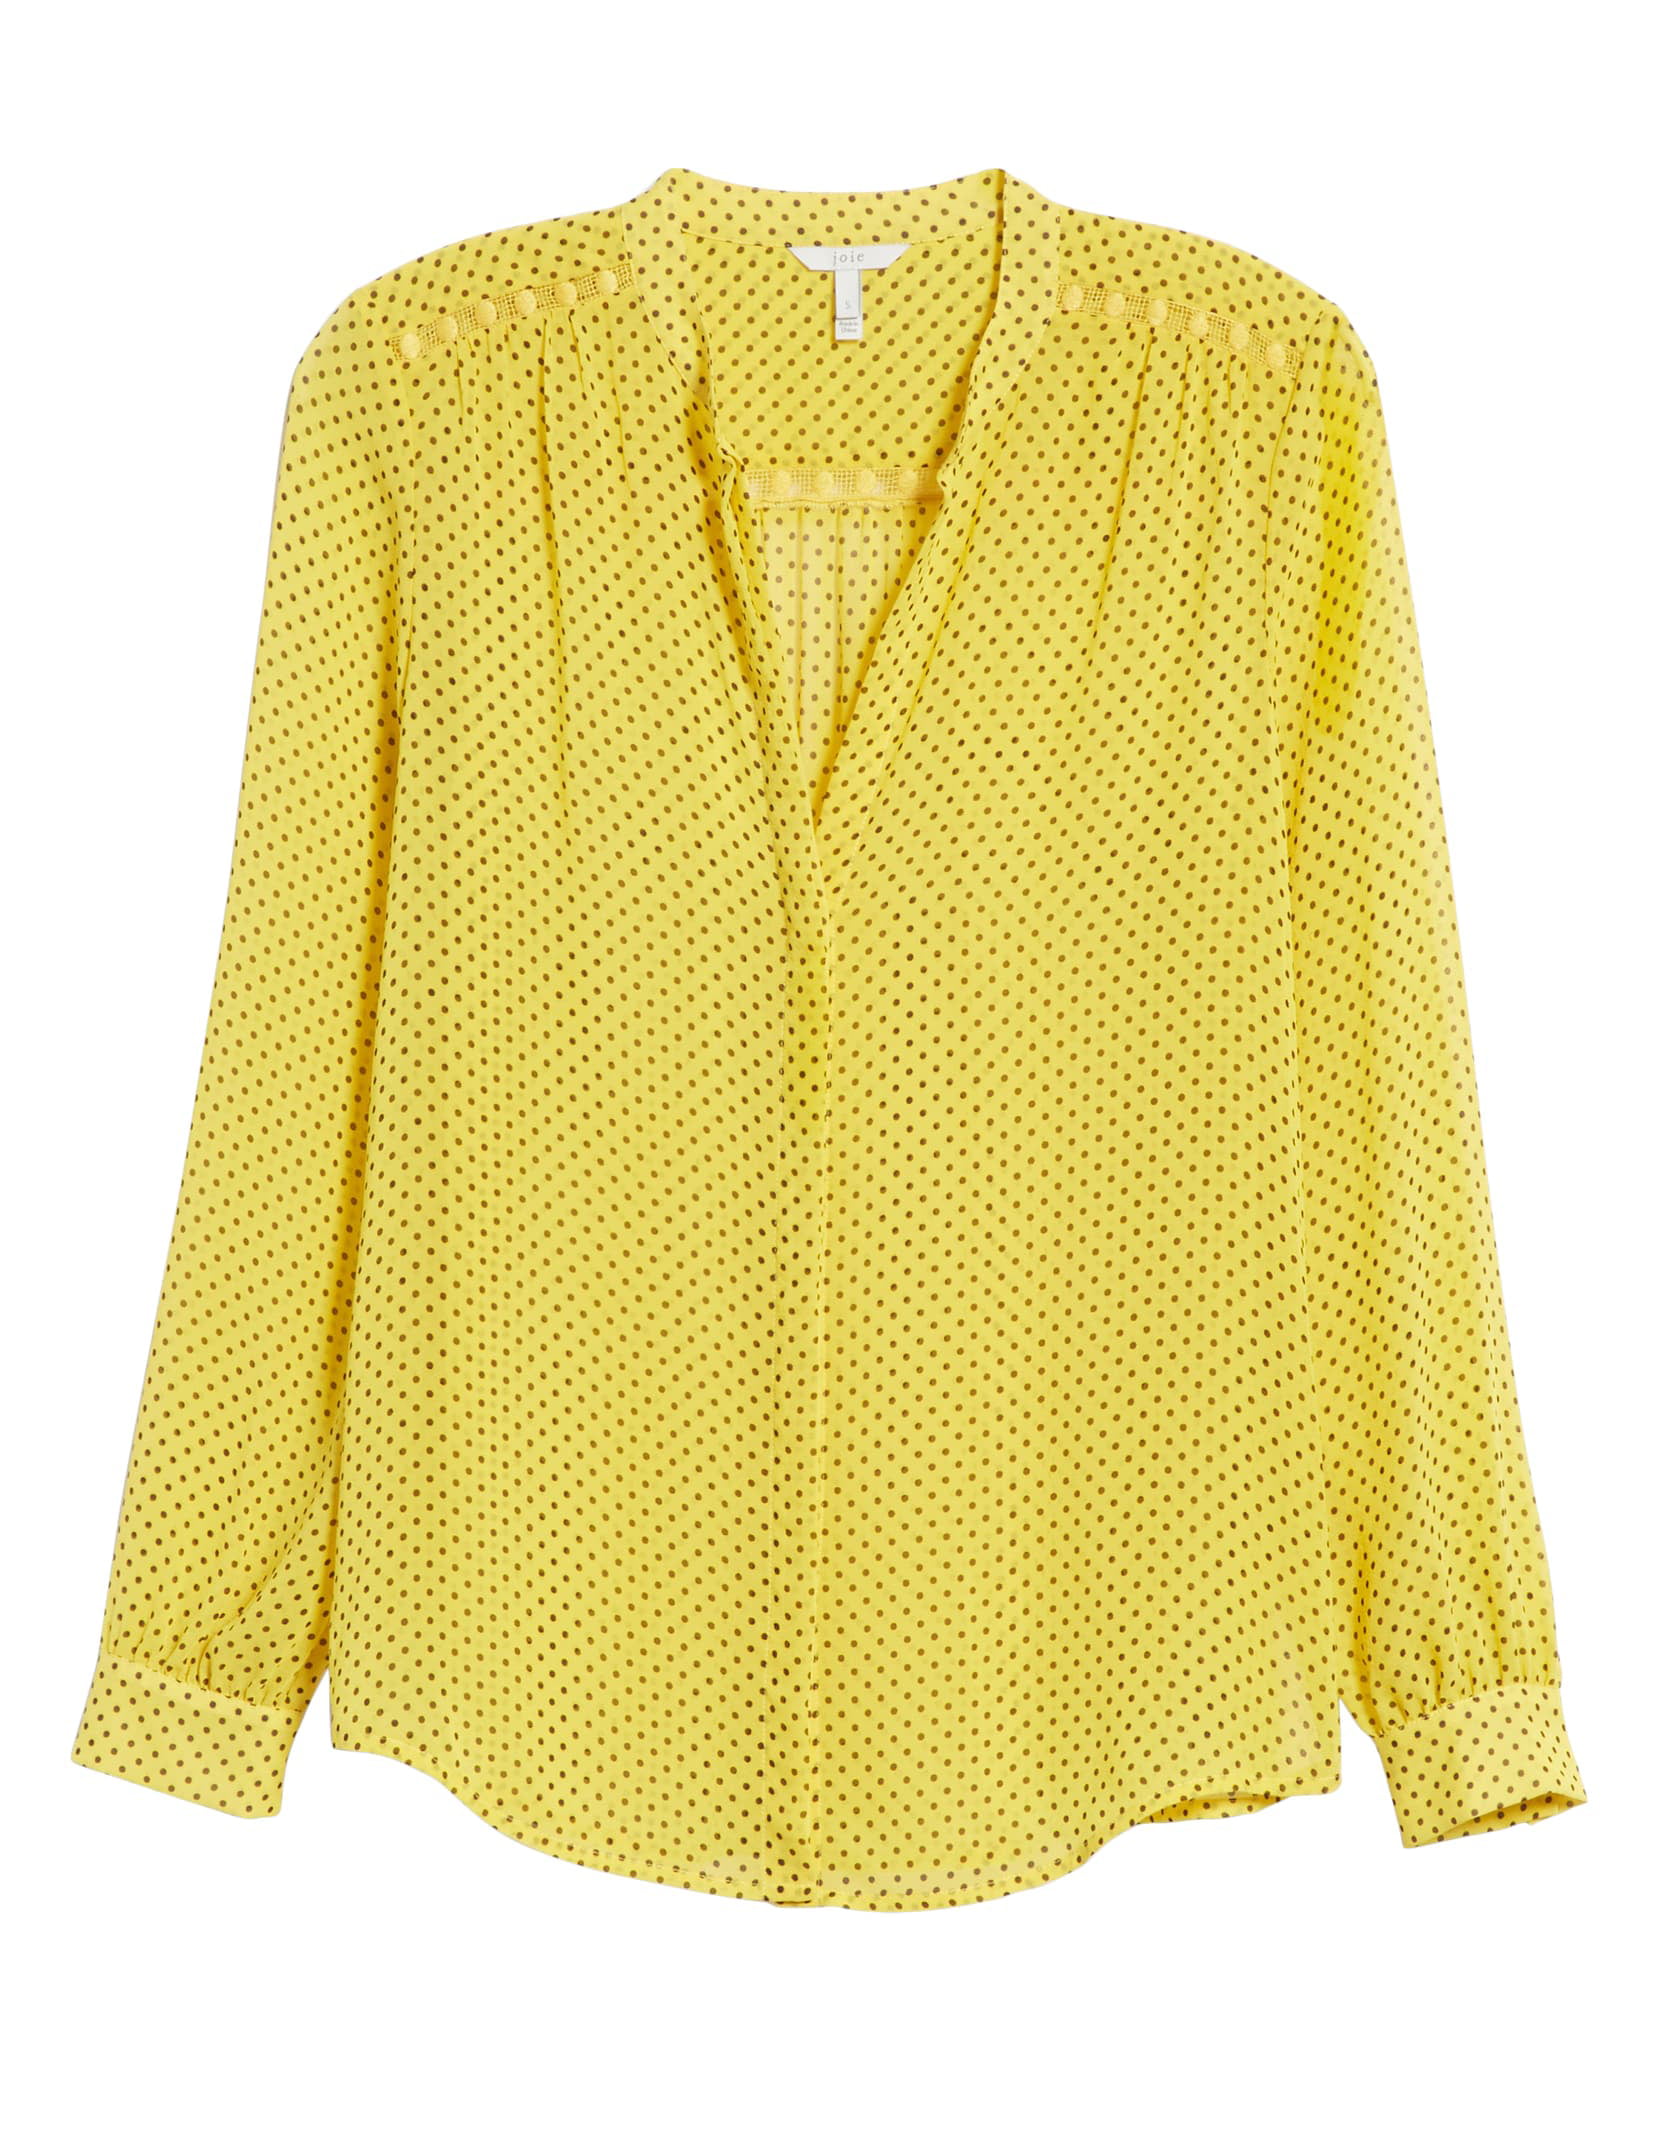 Joie Women's Yellow Polka Dot Mintee Blouse Silk Top (M)